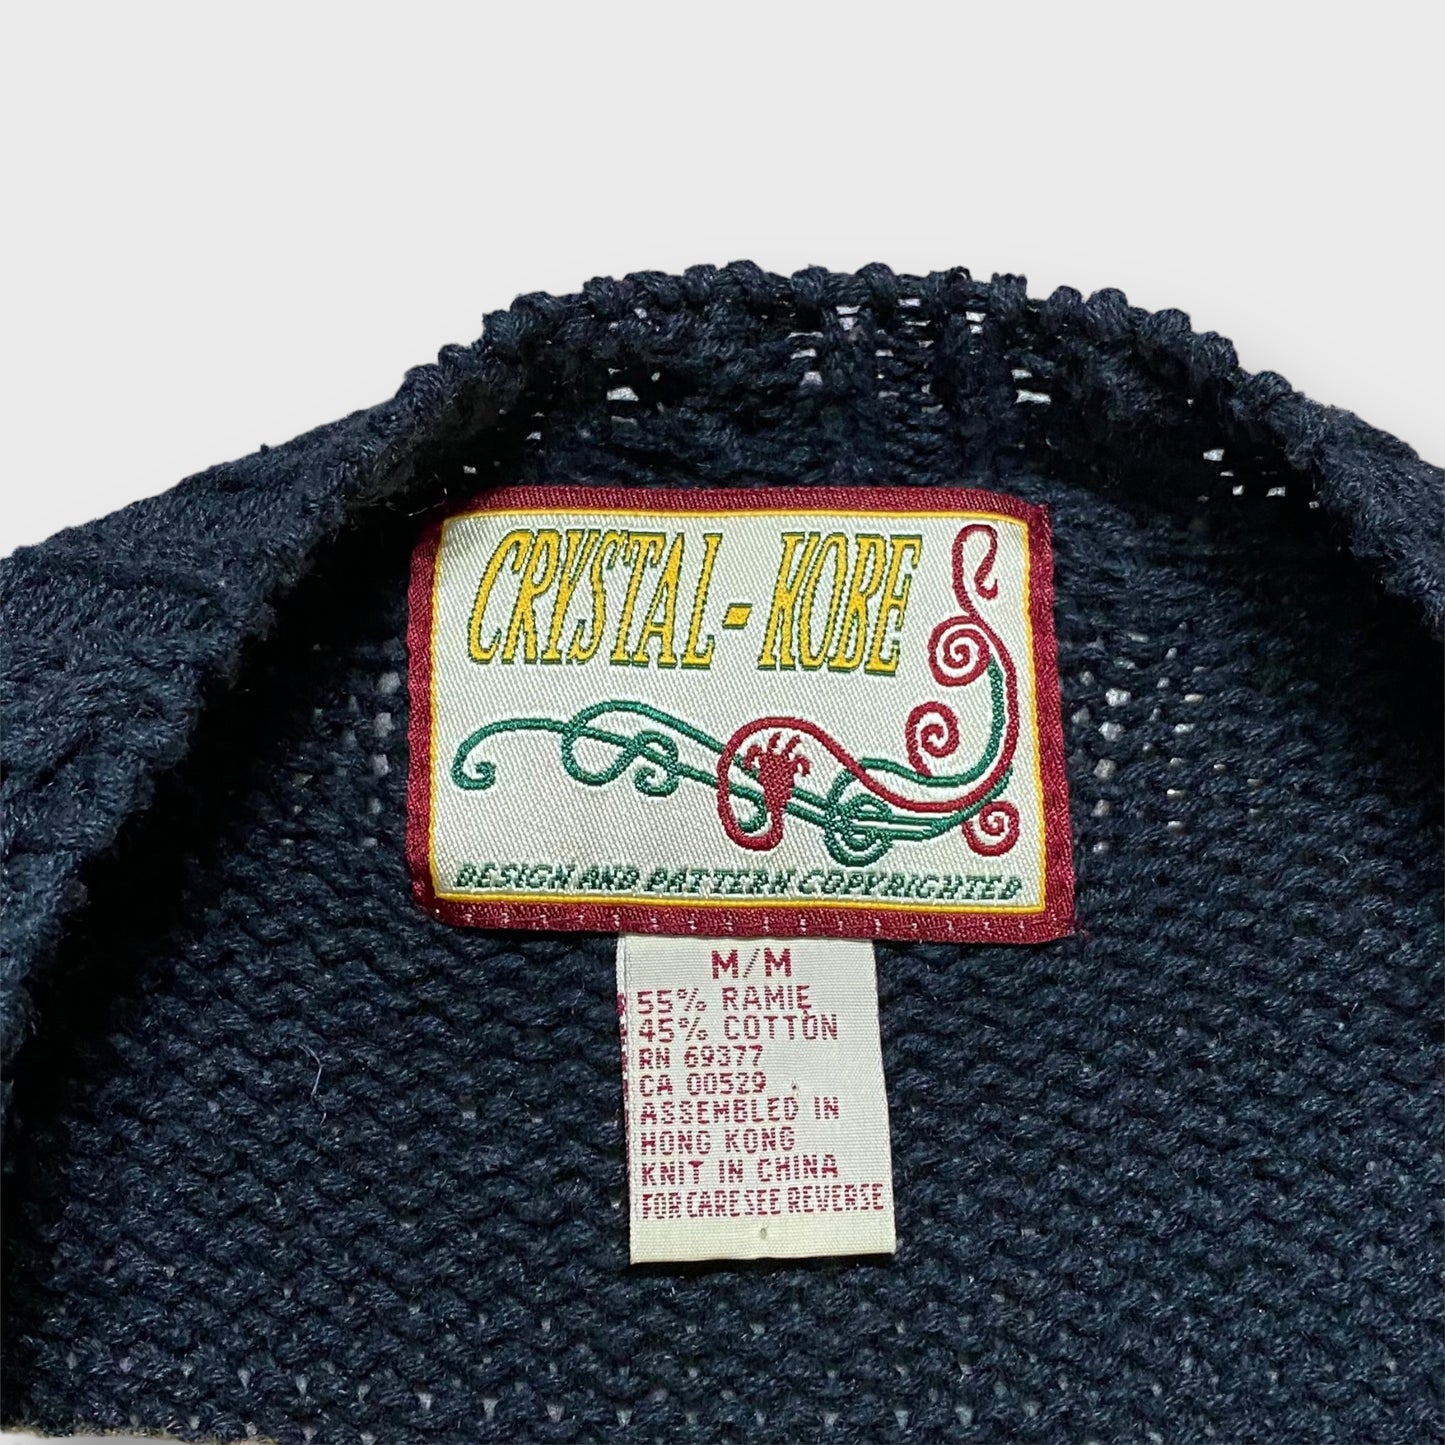 "CRYSTAL-KOBE" Allover pattern cotton knit sweater